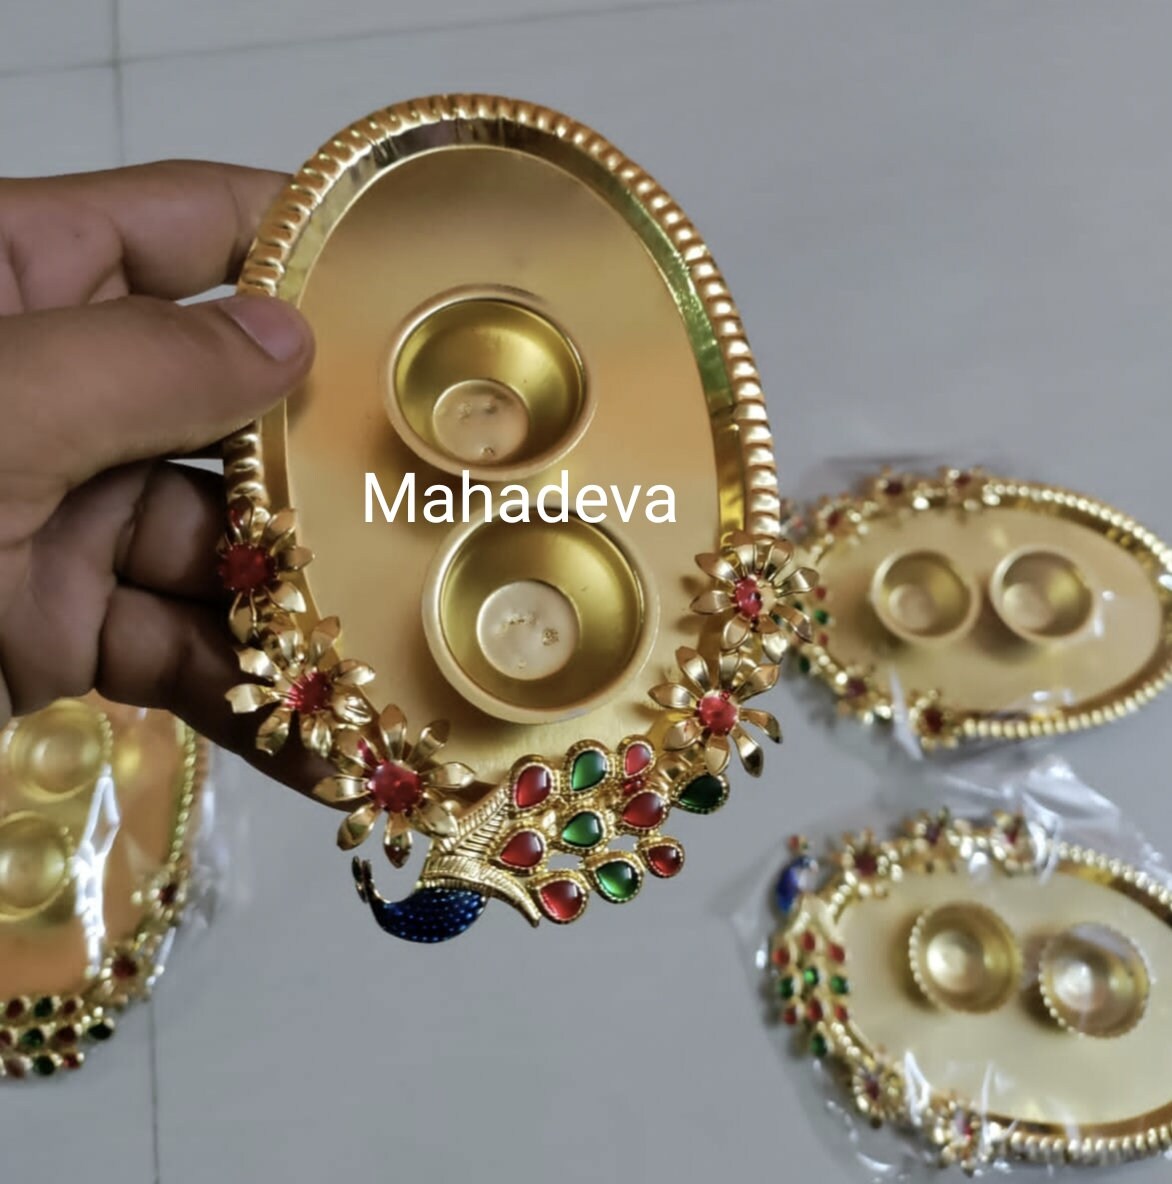 Fidget Spinner at Rs 50, Fidget Spinner in Ludhiana